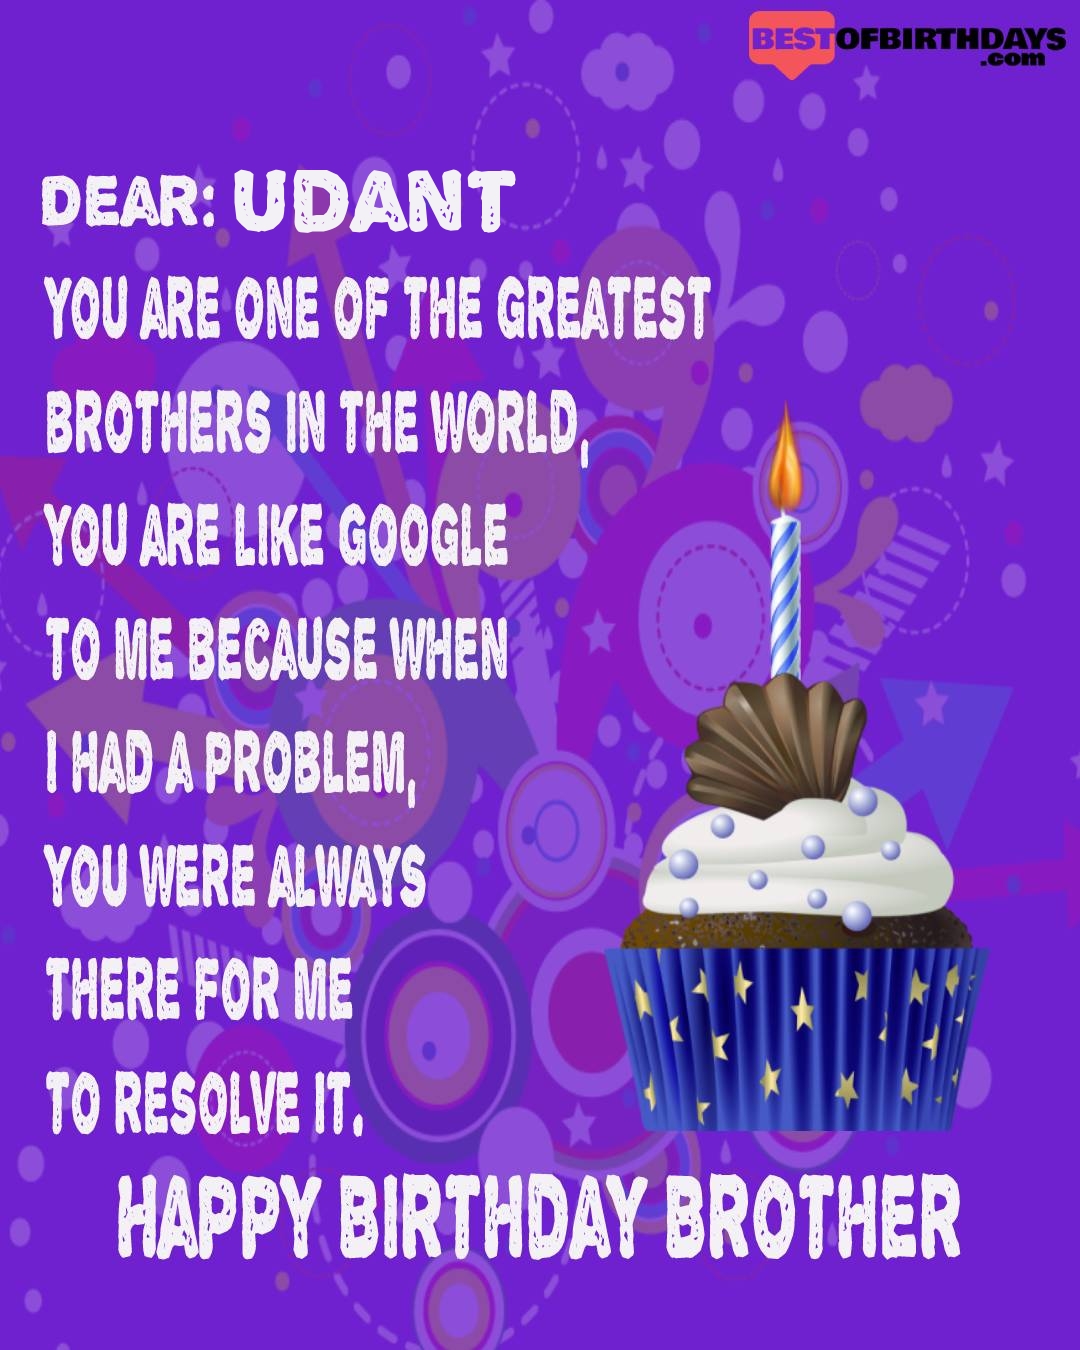 Happy birthday udant bhai brother bro